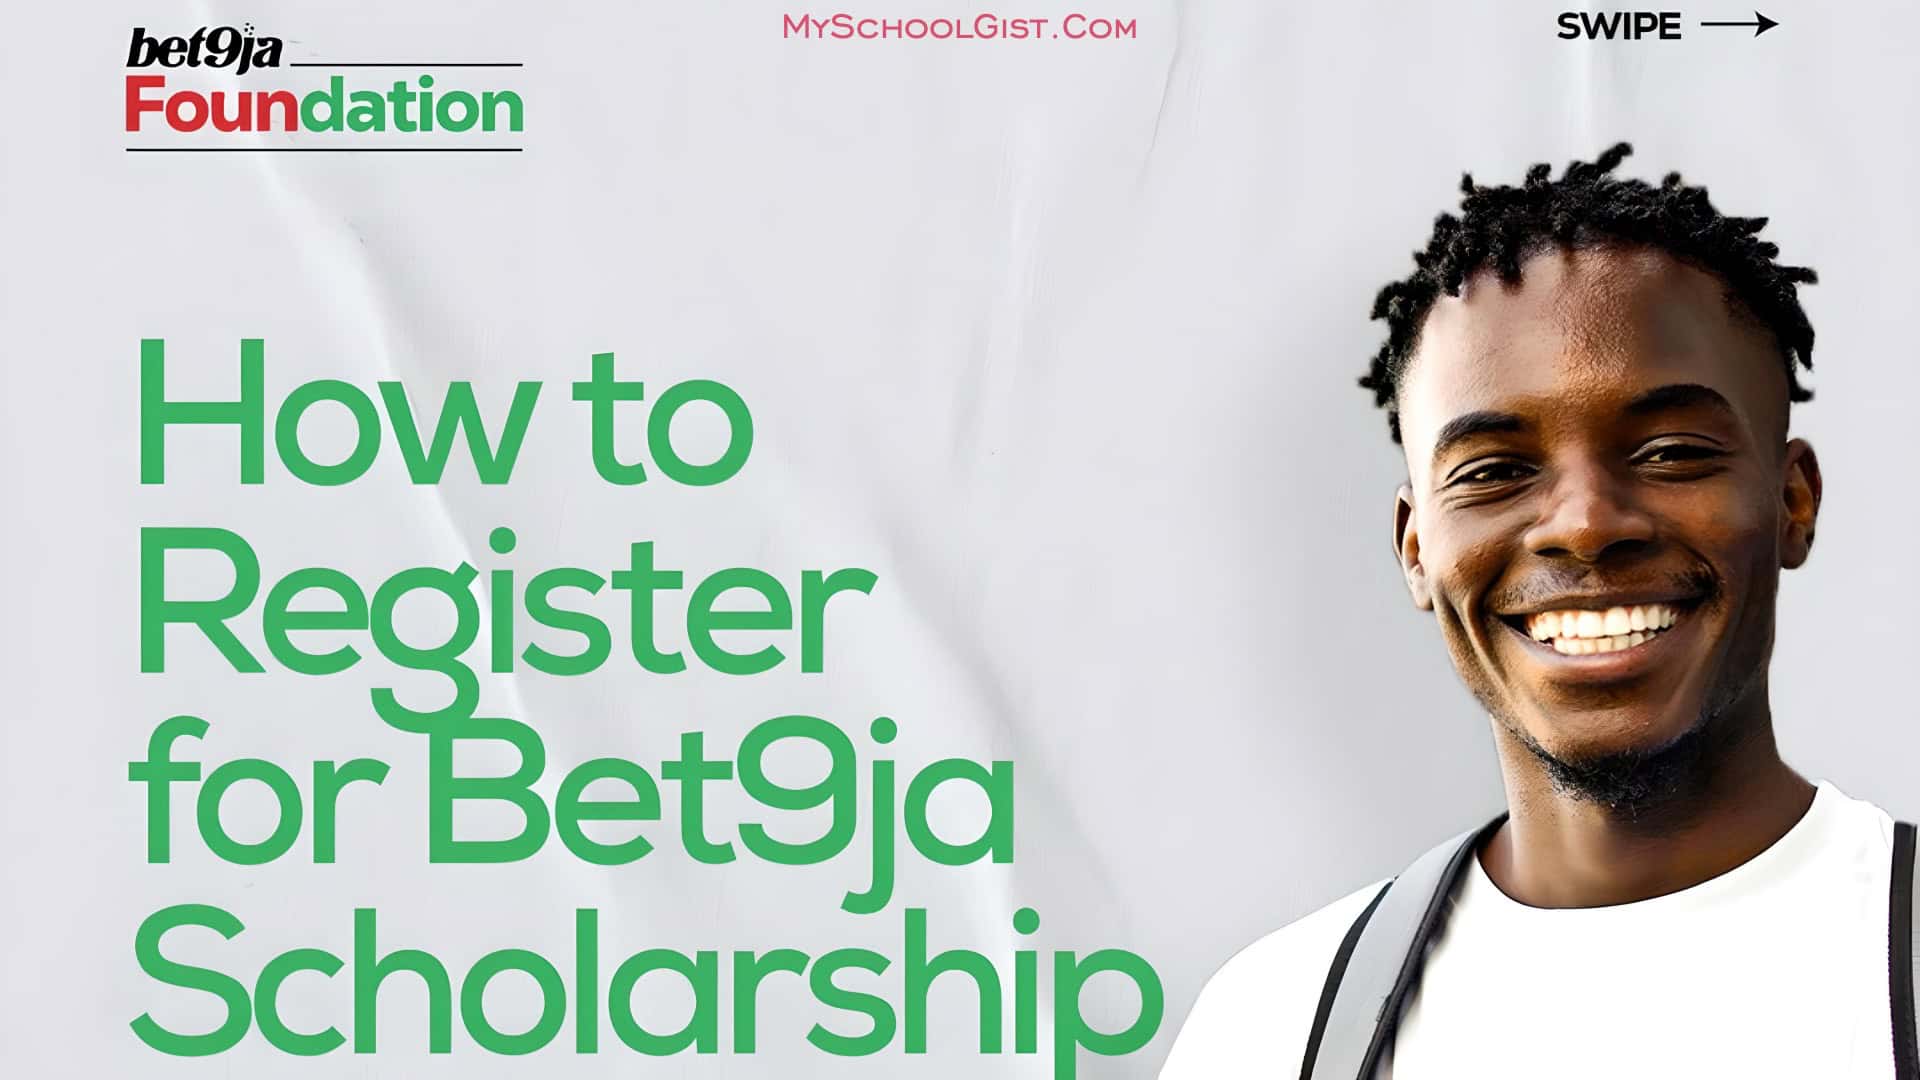 Bet9ja Foundation Nigeria Undergraduate Scholarship